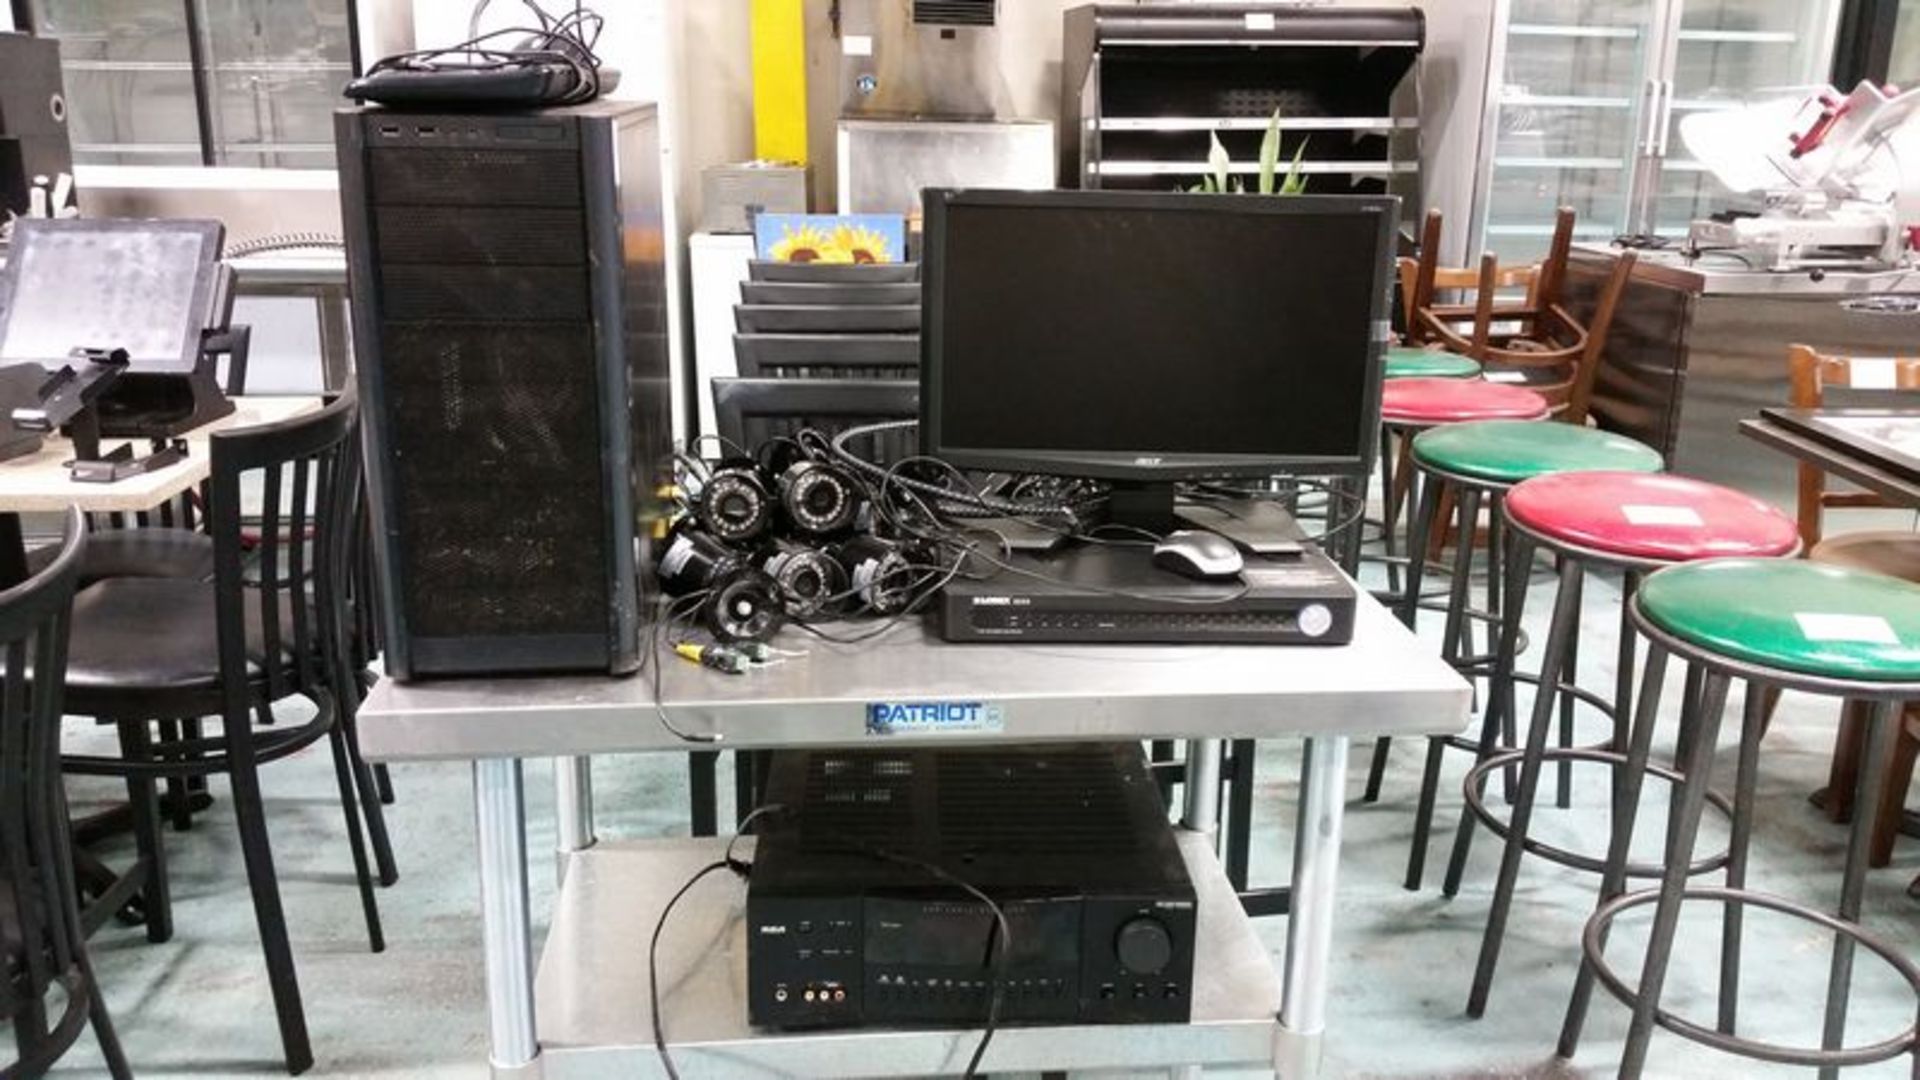 Lorex Surveillance System with 7 cameras - New in 2013